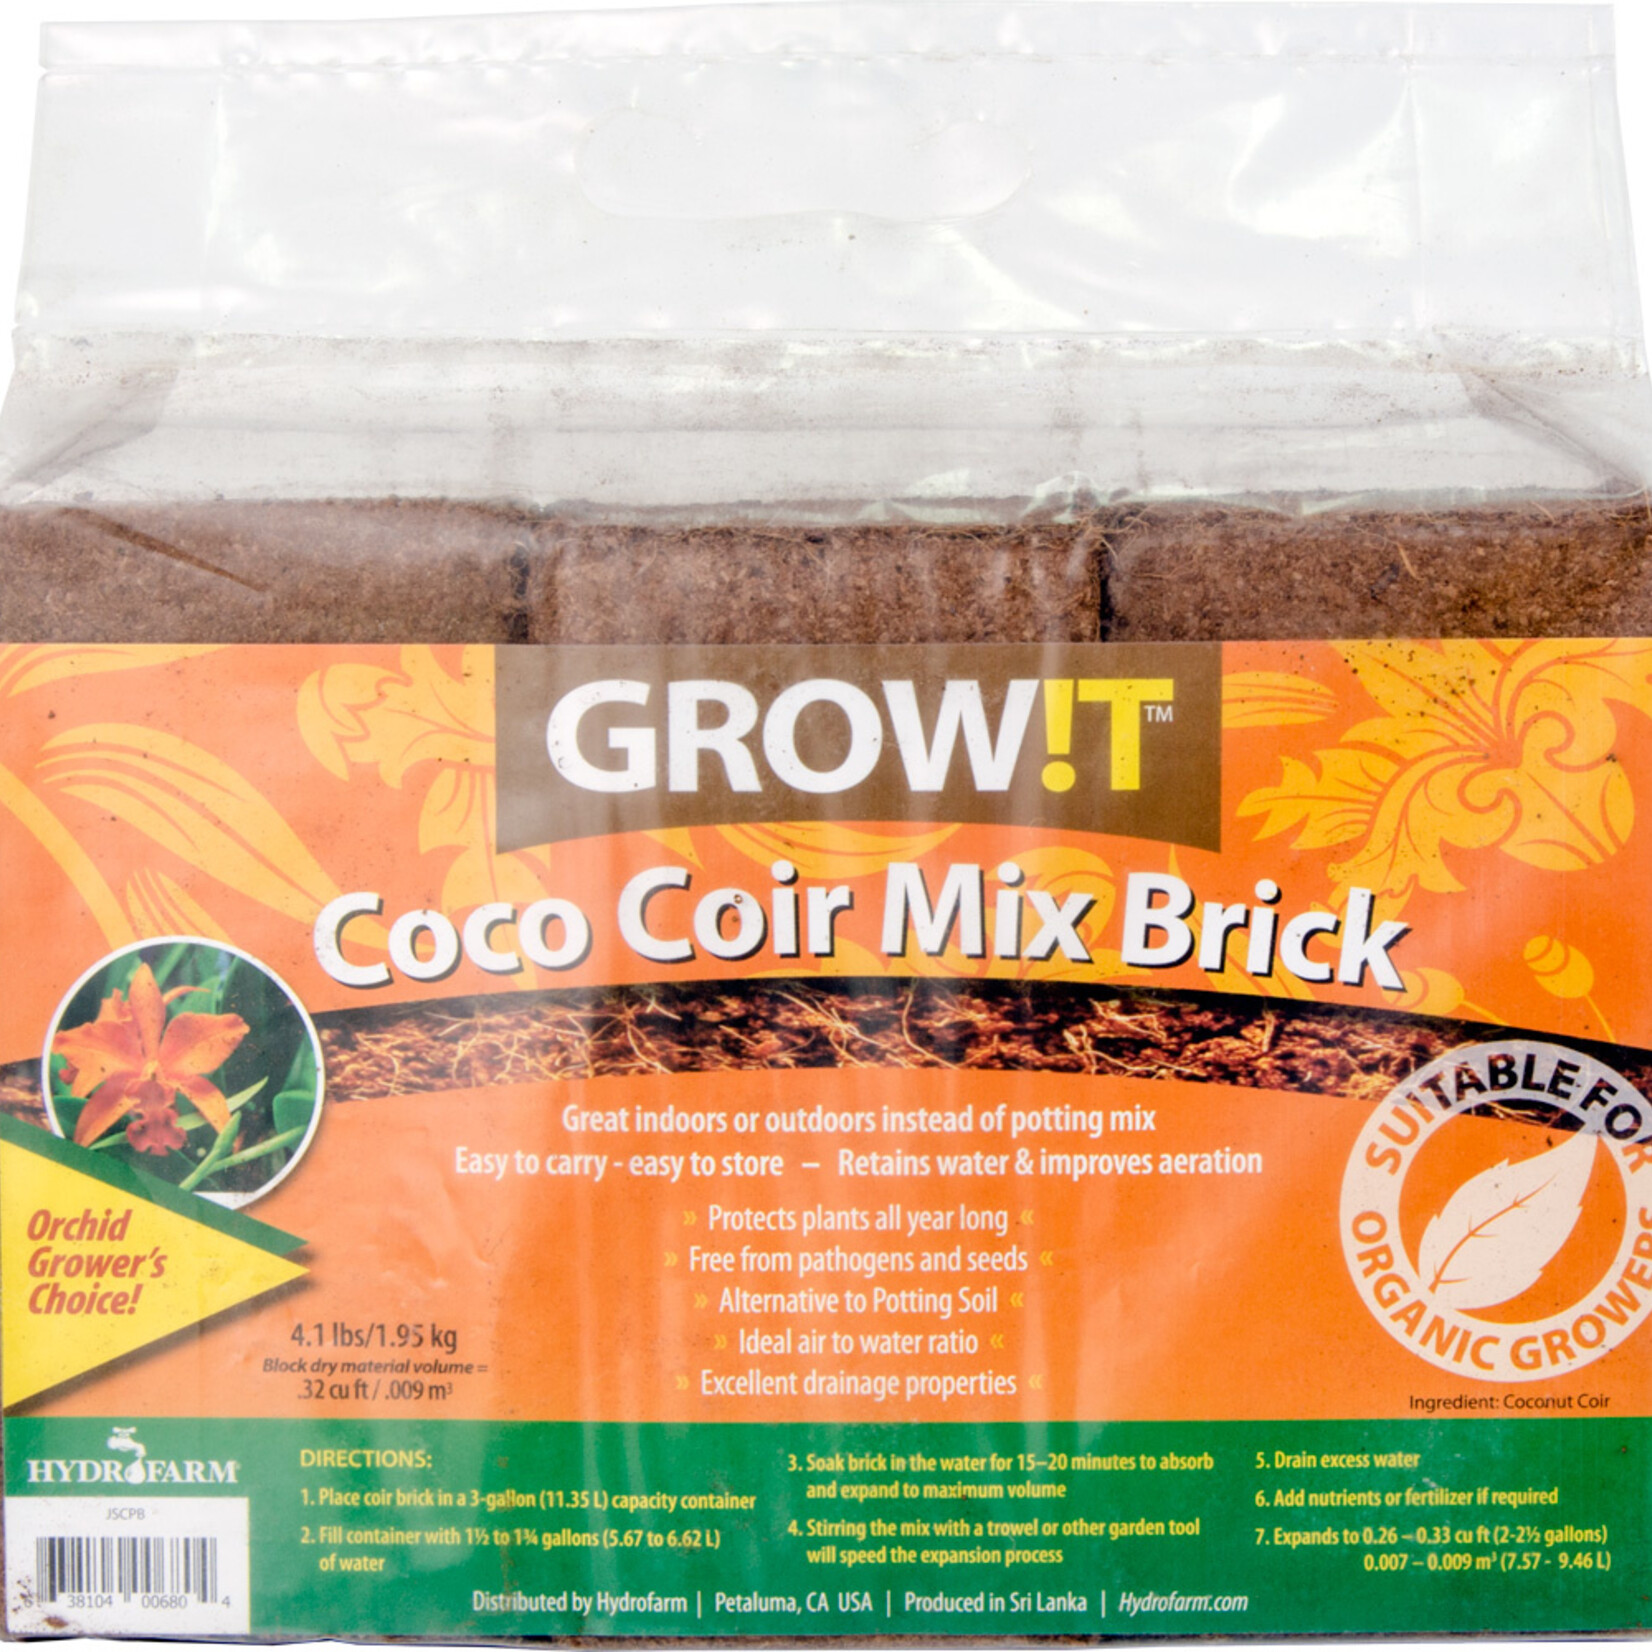 Hydrofarm GROW!T Coco Coir Mix Brick, pack of 3